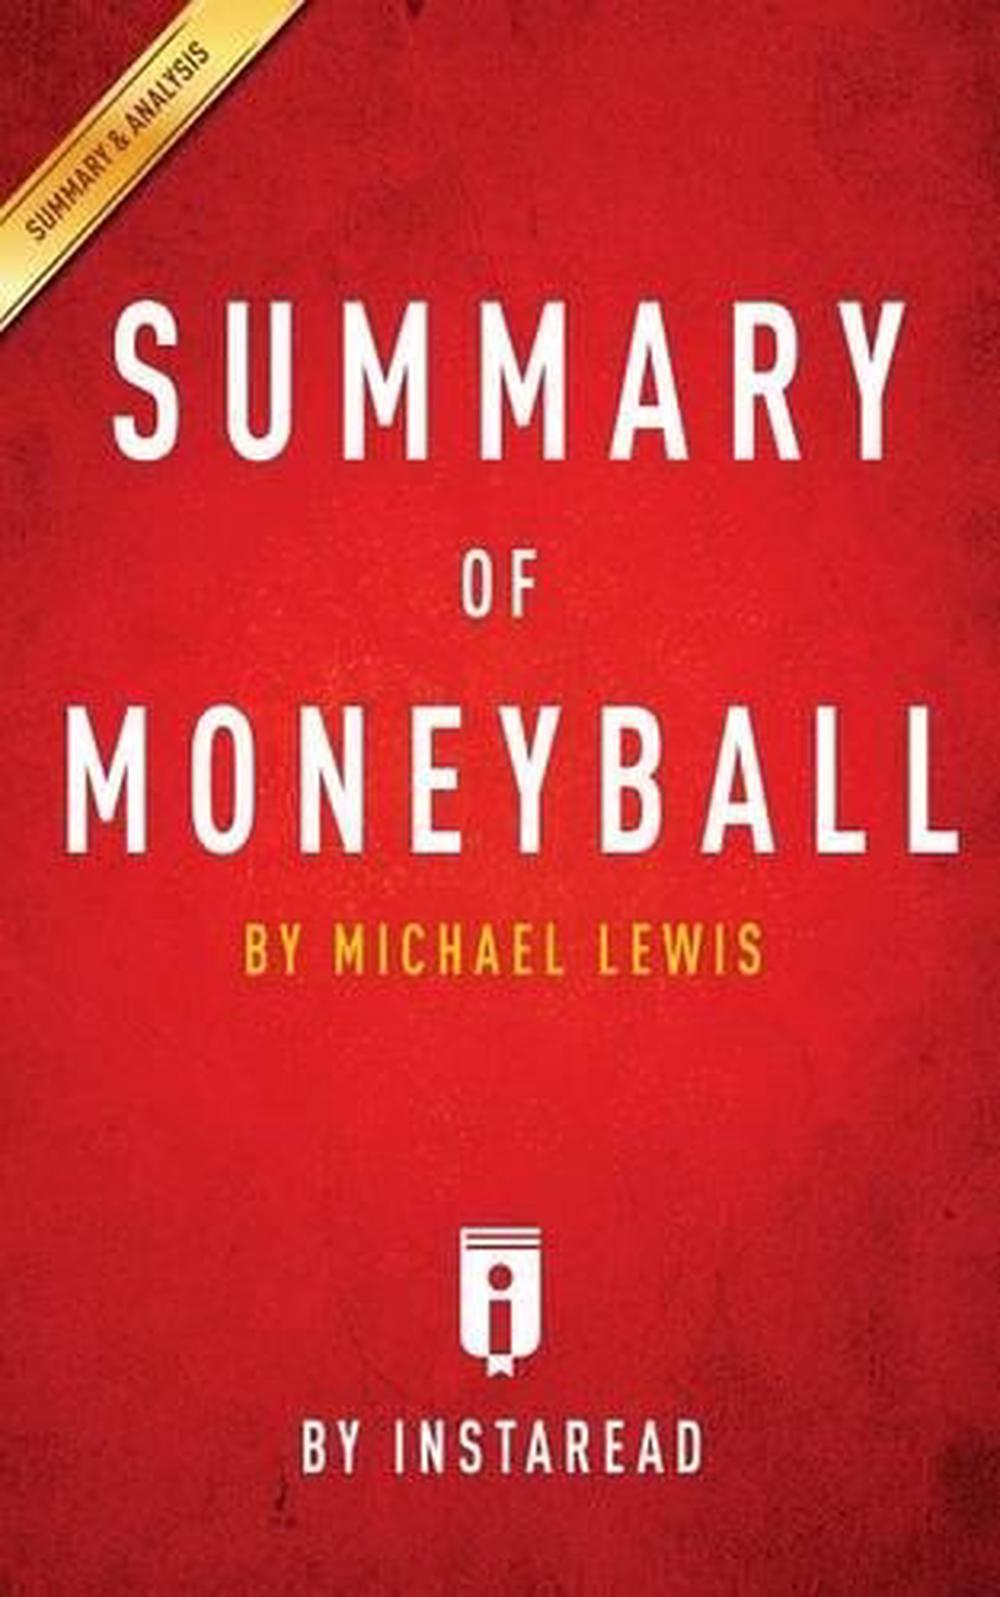 moneyball author